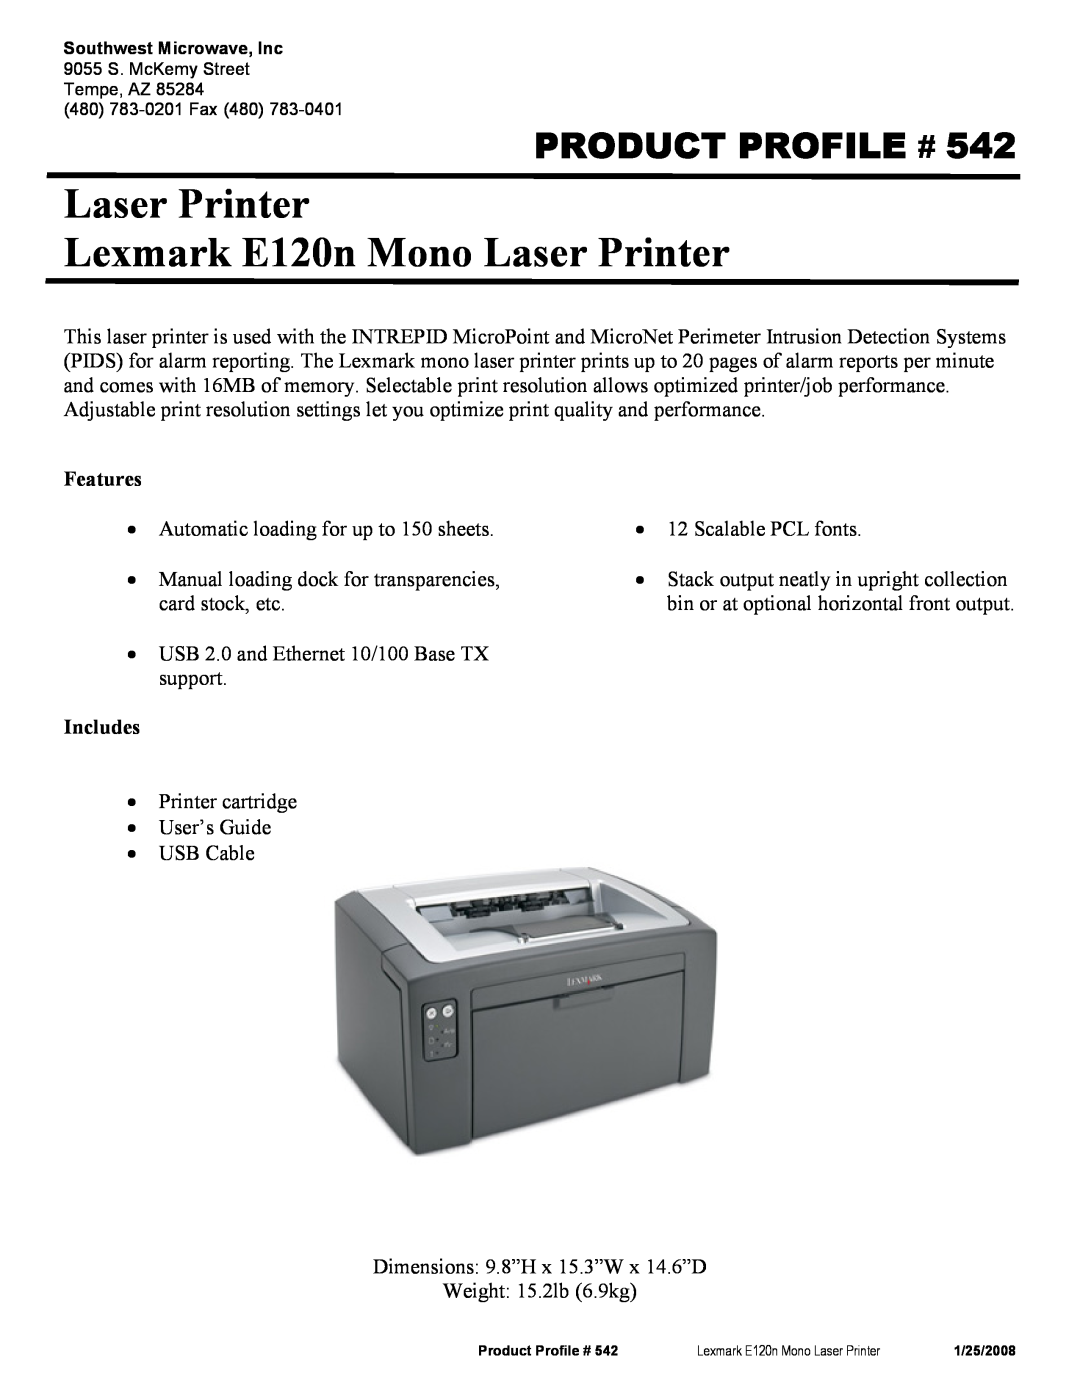 Univex dimensions Laser Printer Lexmark E120n Mono Laser Printer, Product Profile #, Features, Includes 